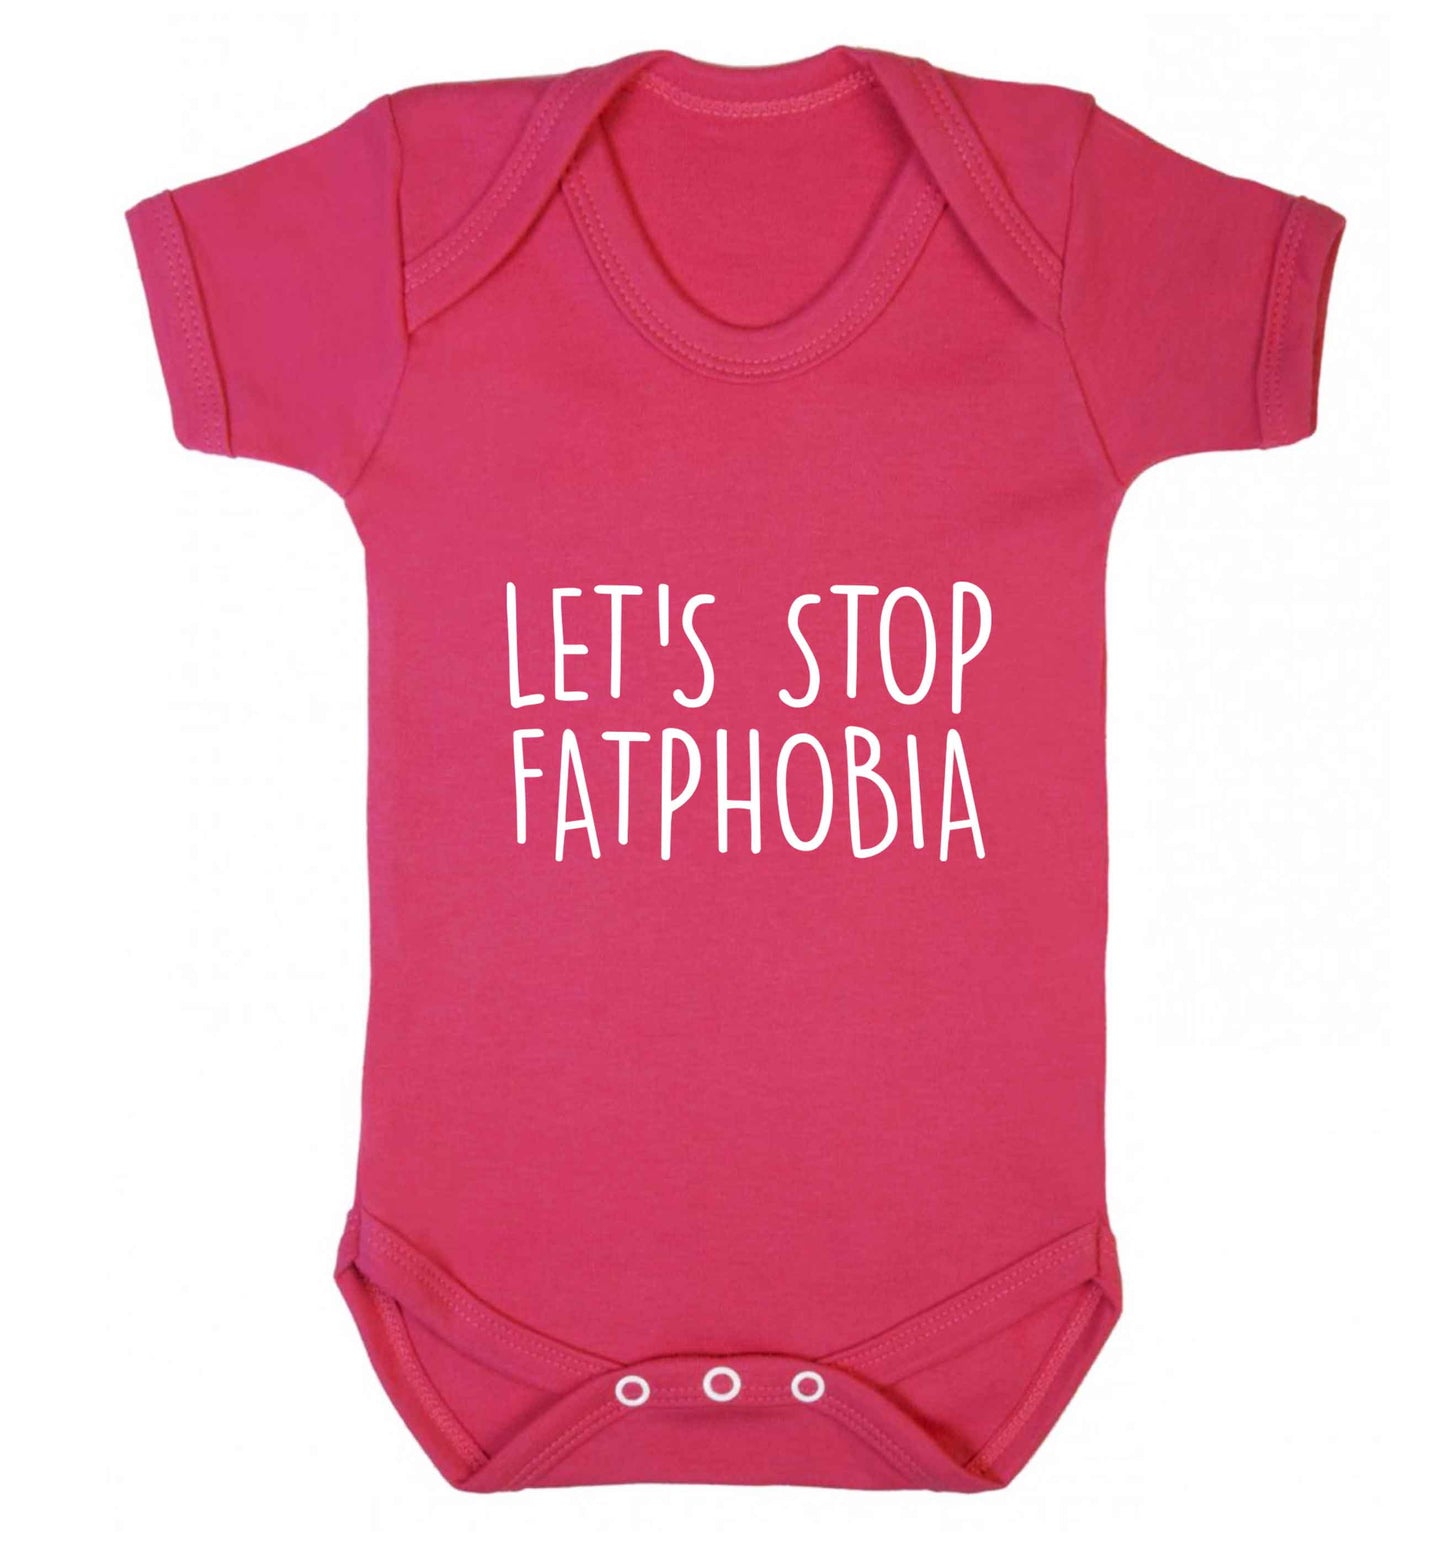 Let's stop fatphobia baby vest dark pink 18-24 months